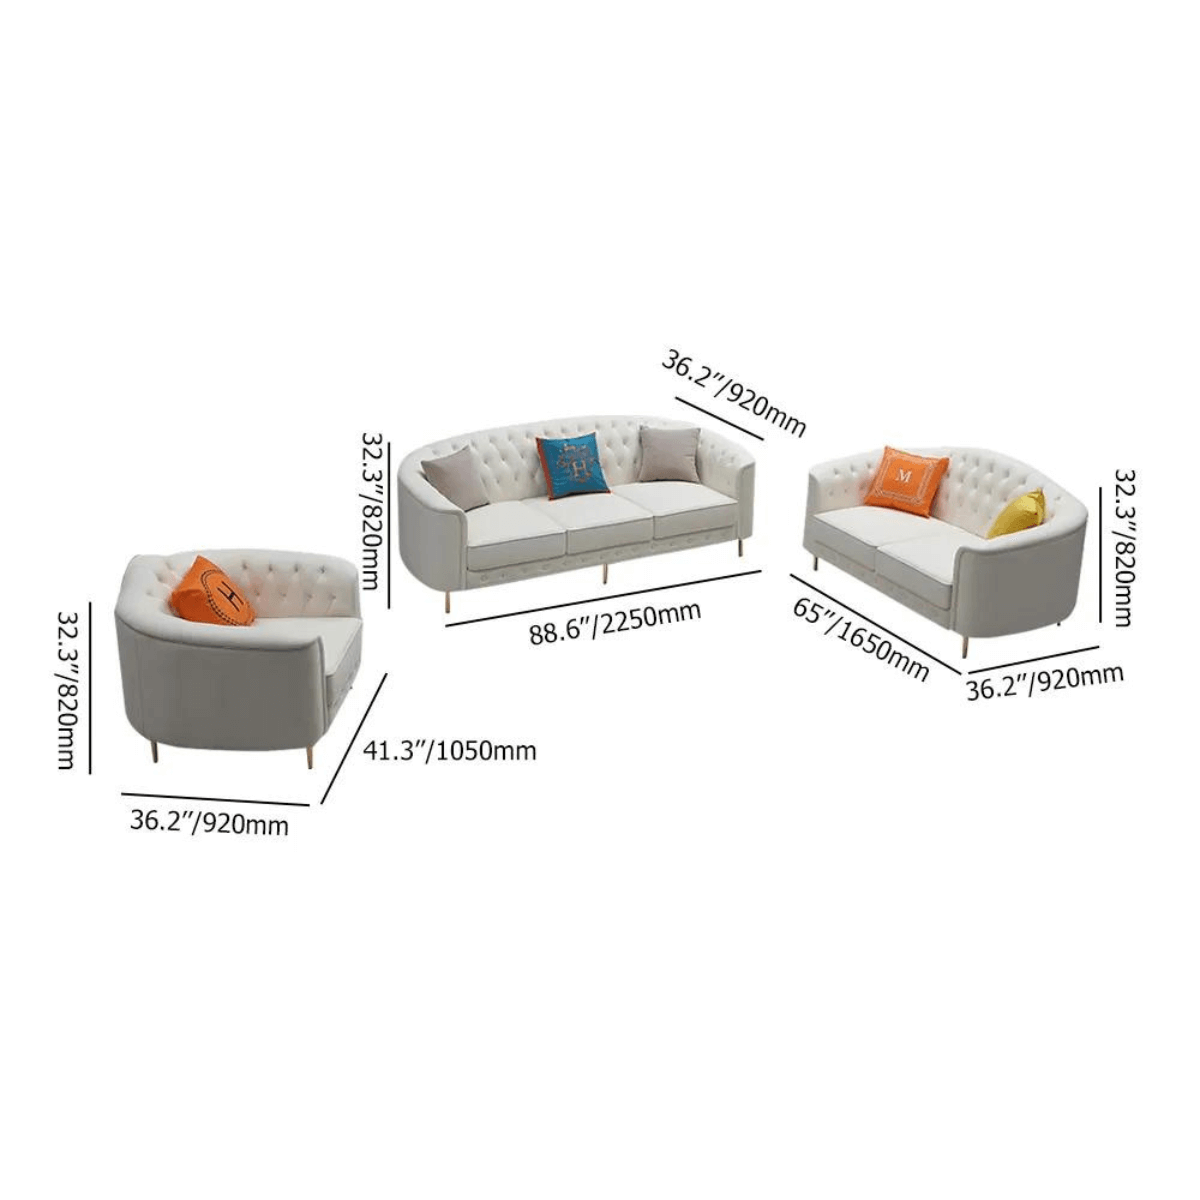 3-Pieces-beige-leather-sofa-set-in-australia-measurement